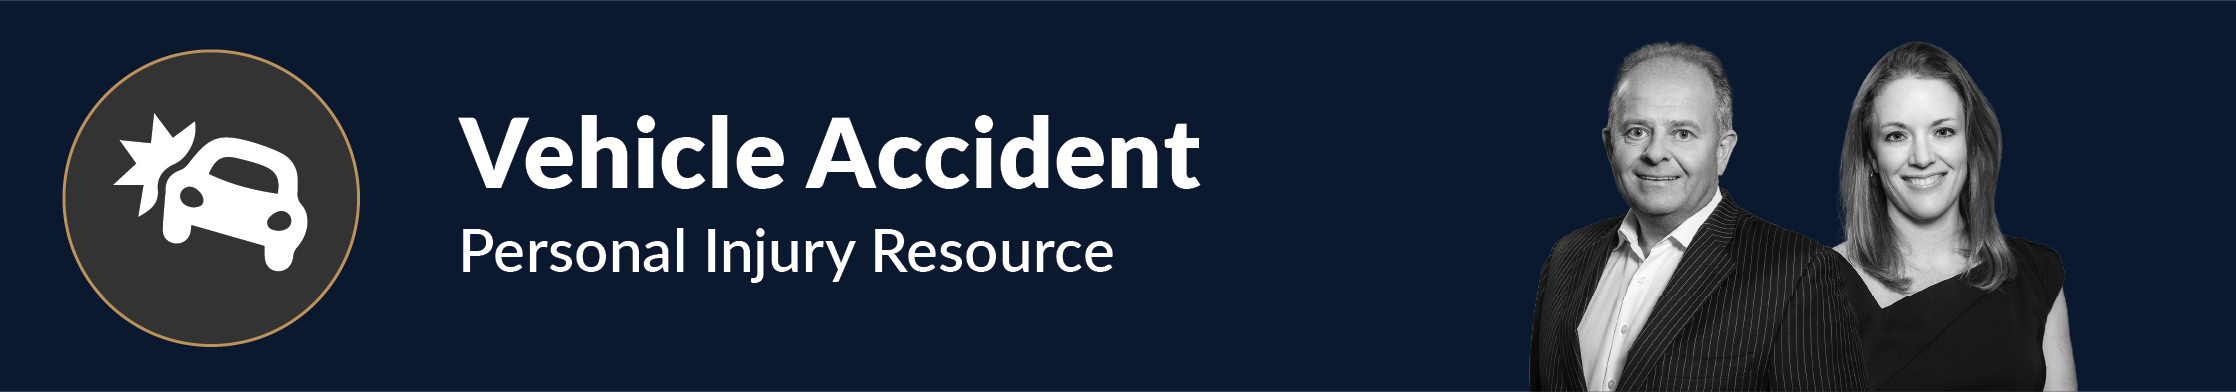 vehicle accident resource